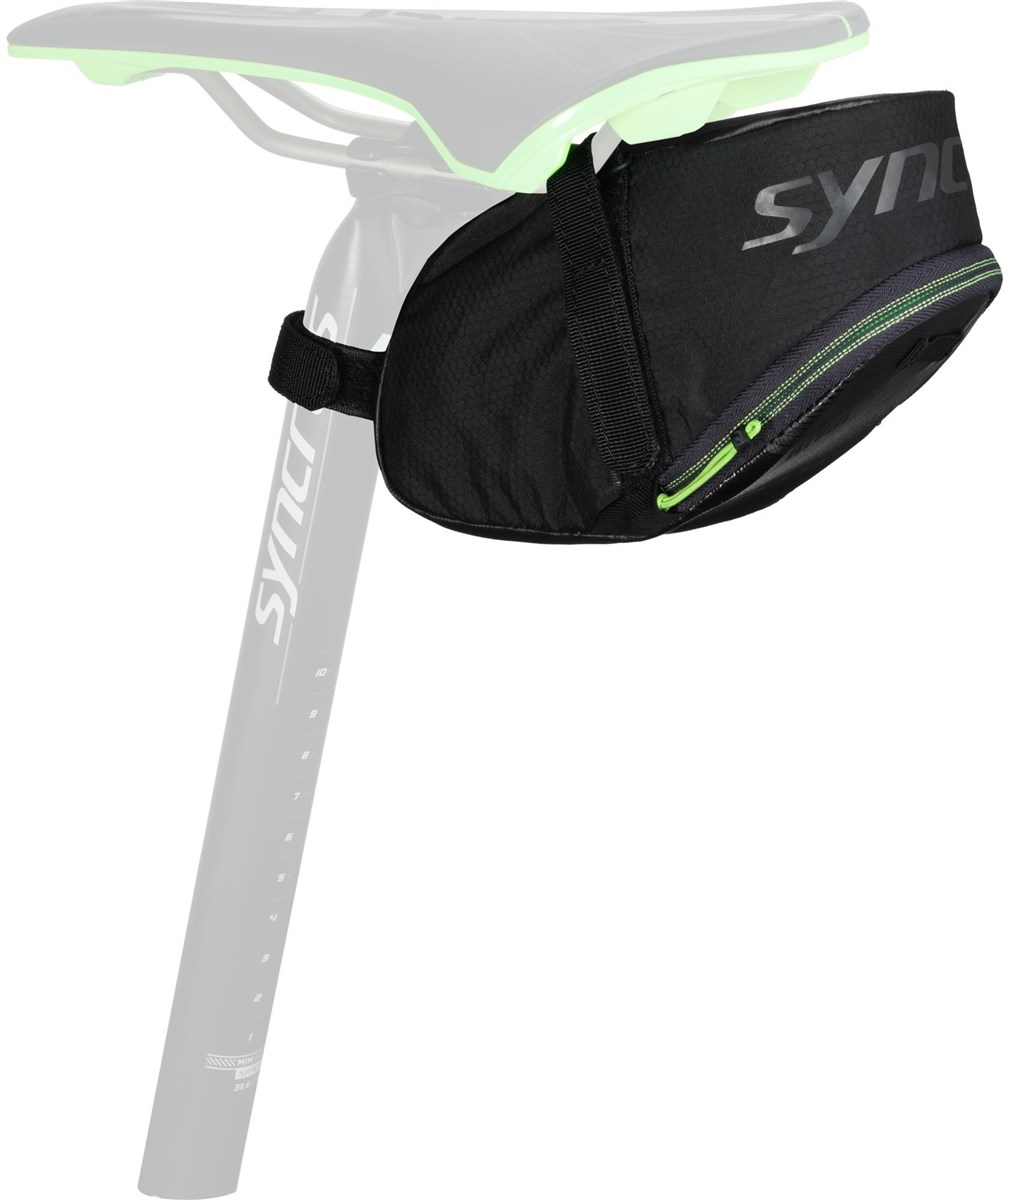 Syncros HiVol 750 Saddle Bag with Strap